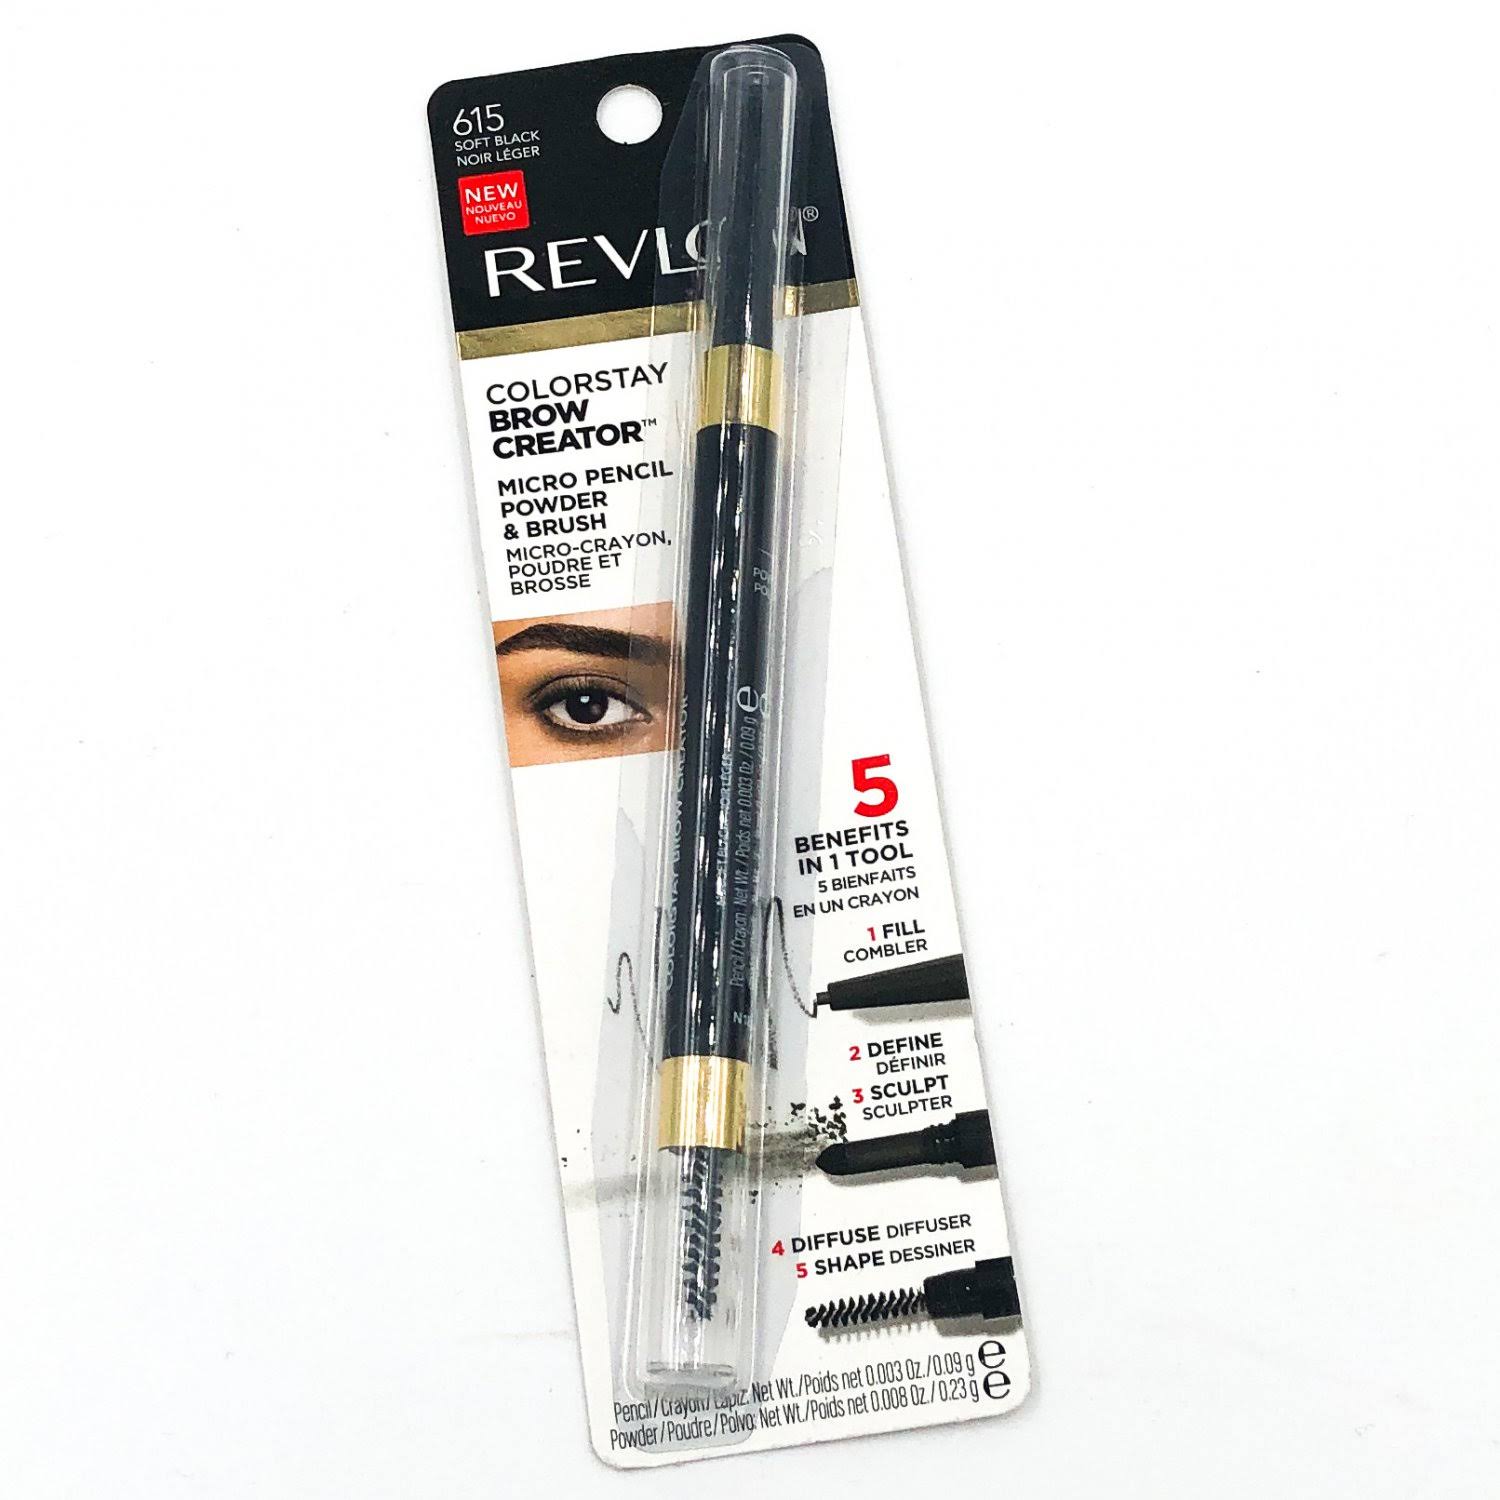 Revlon ColorStay Micro Pencil Powder & Brush, Brow Creator, Soft Black 615 - 0.003 oz